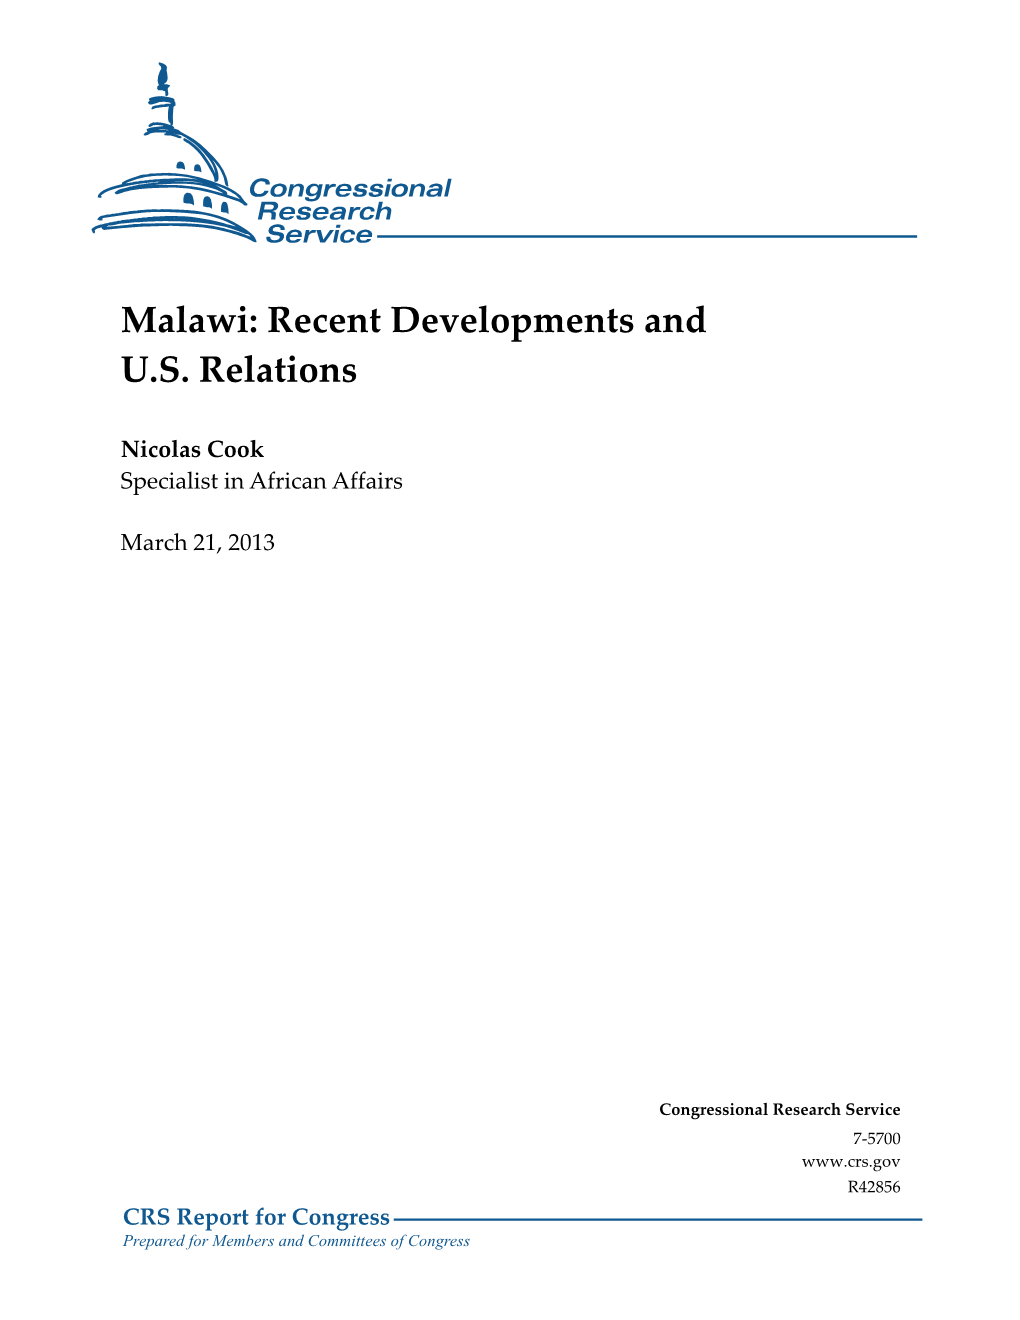 Malawi: Recent Developments and U.S. Relations